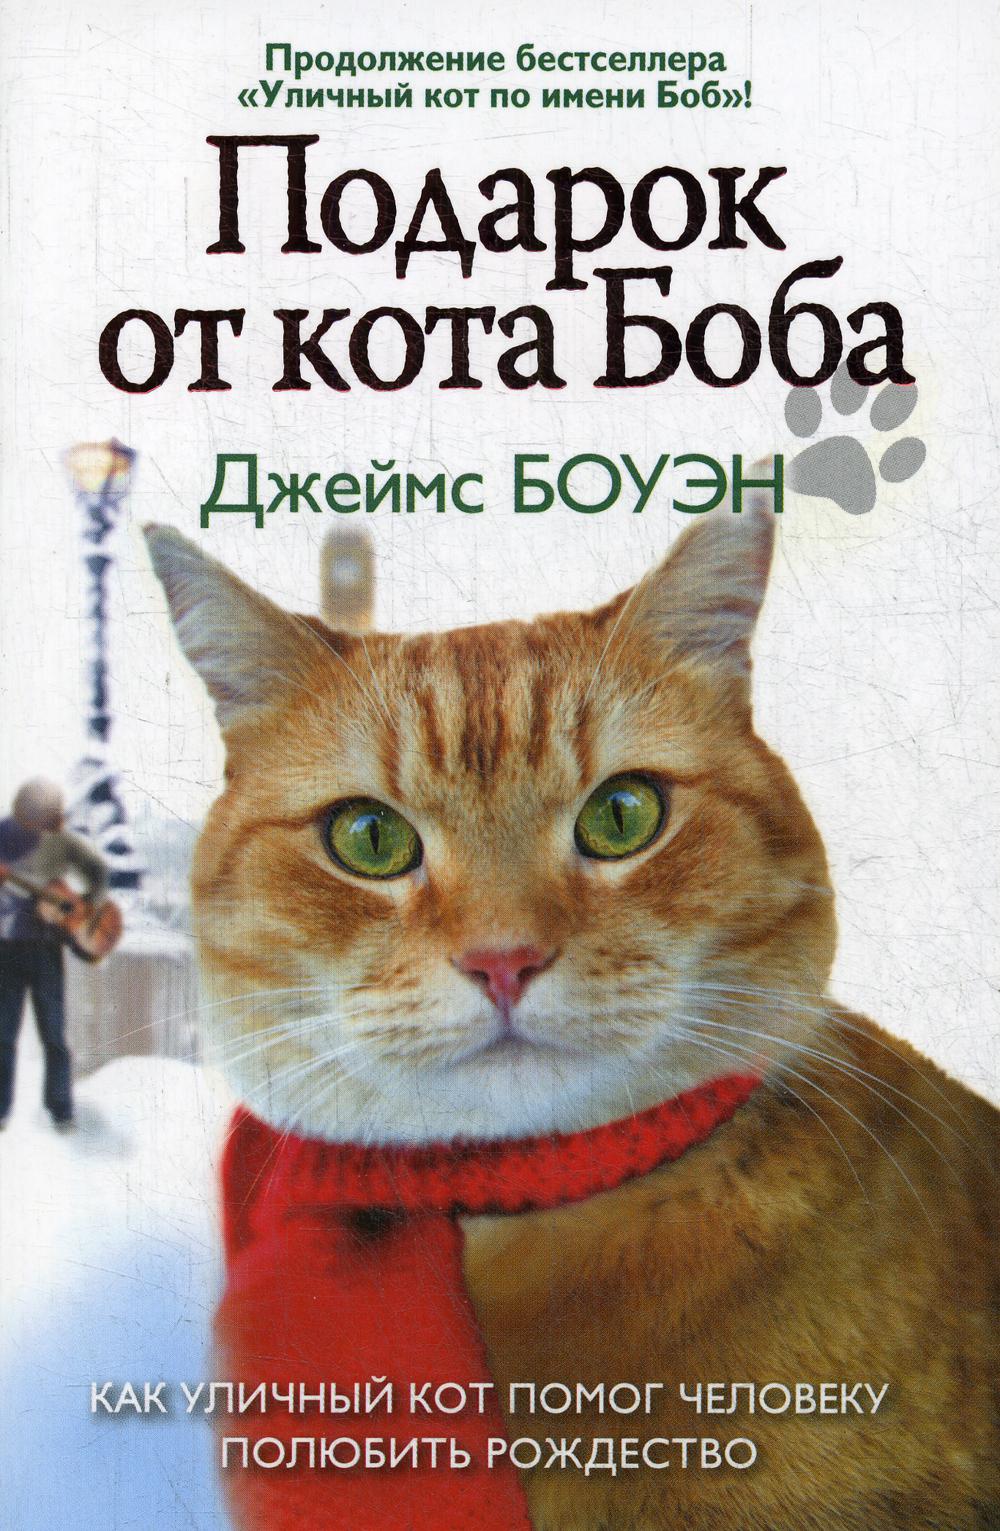 A christmas gift from bob. Книга Боуэн подарок от кота Боба.